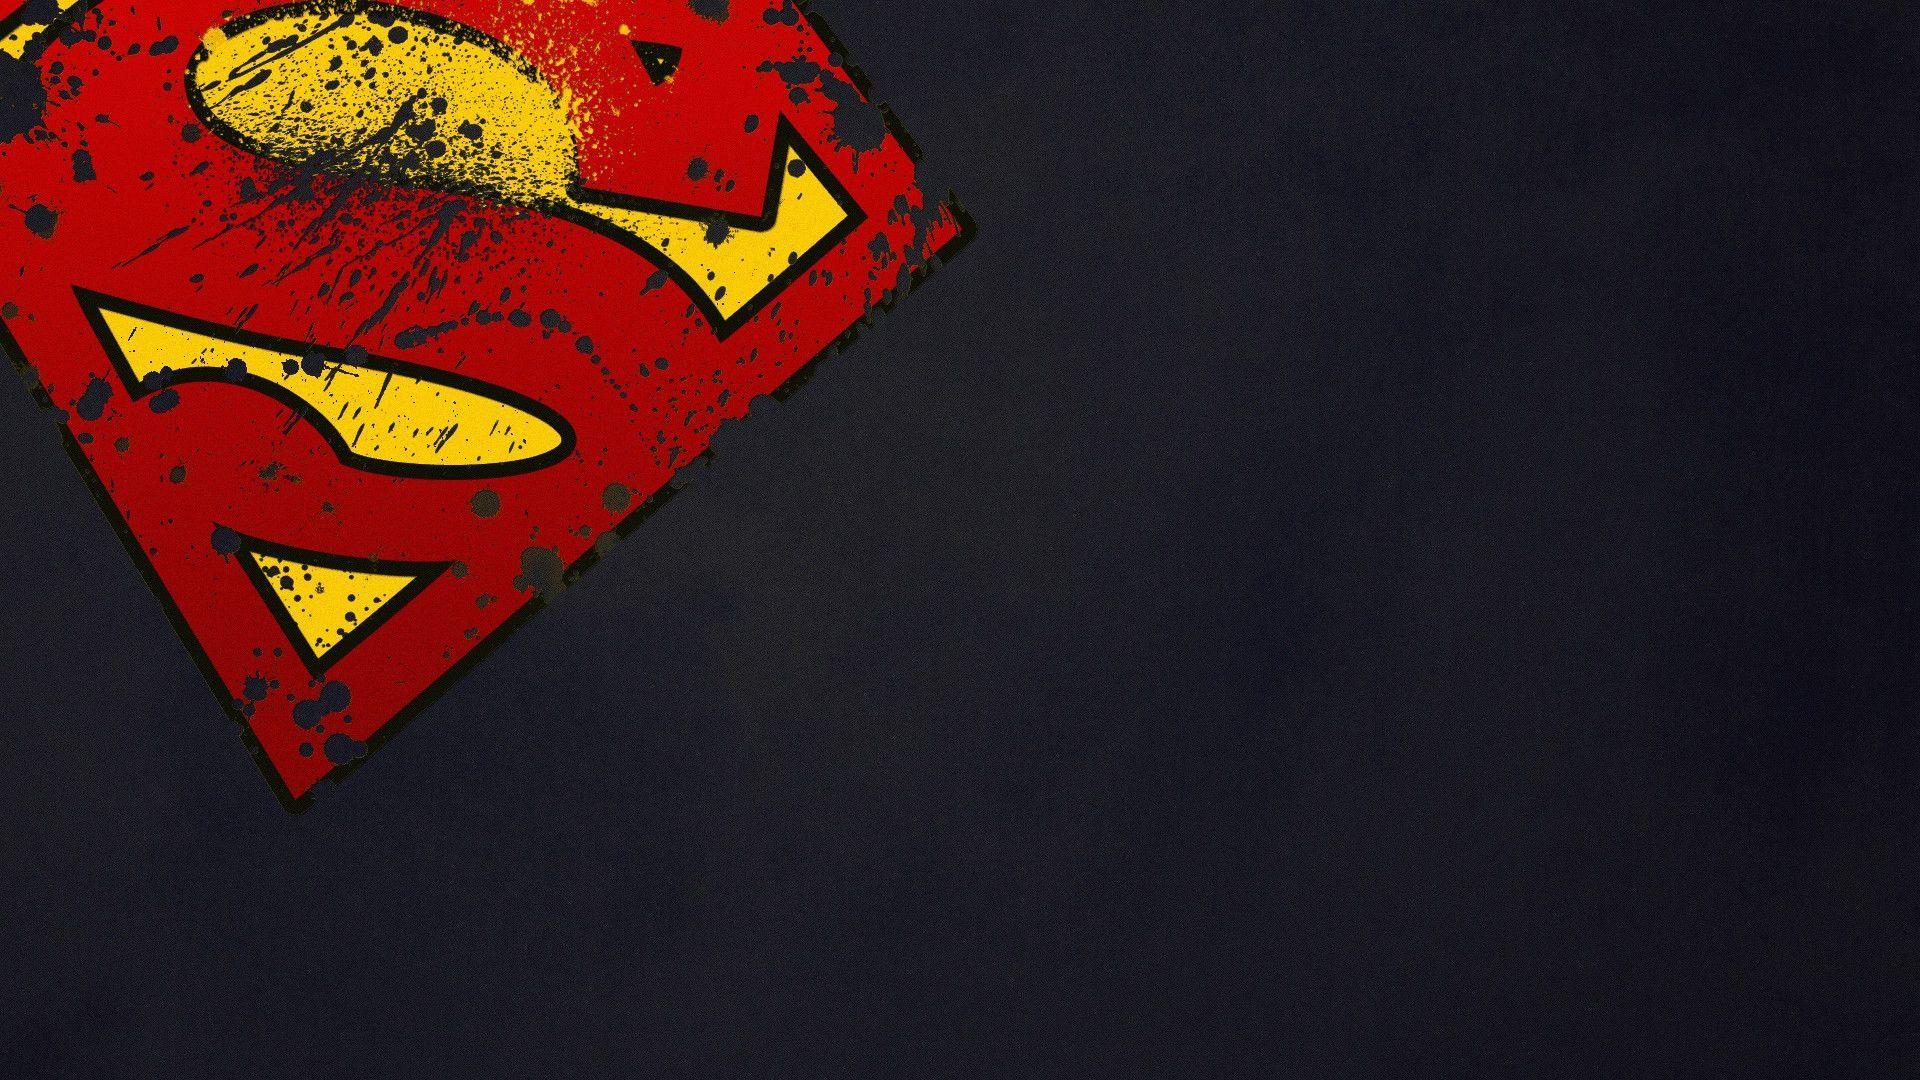 Superhero Logos Wallpaper Image & Picture